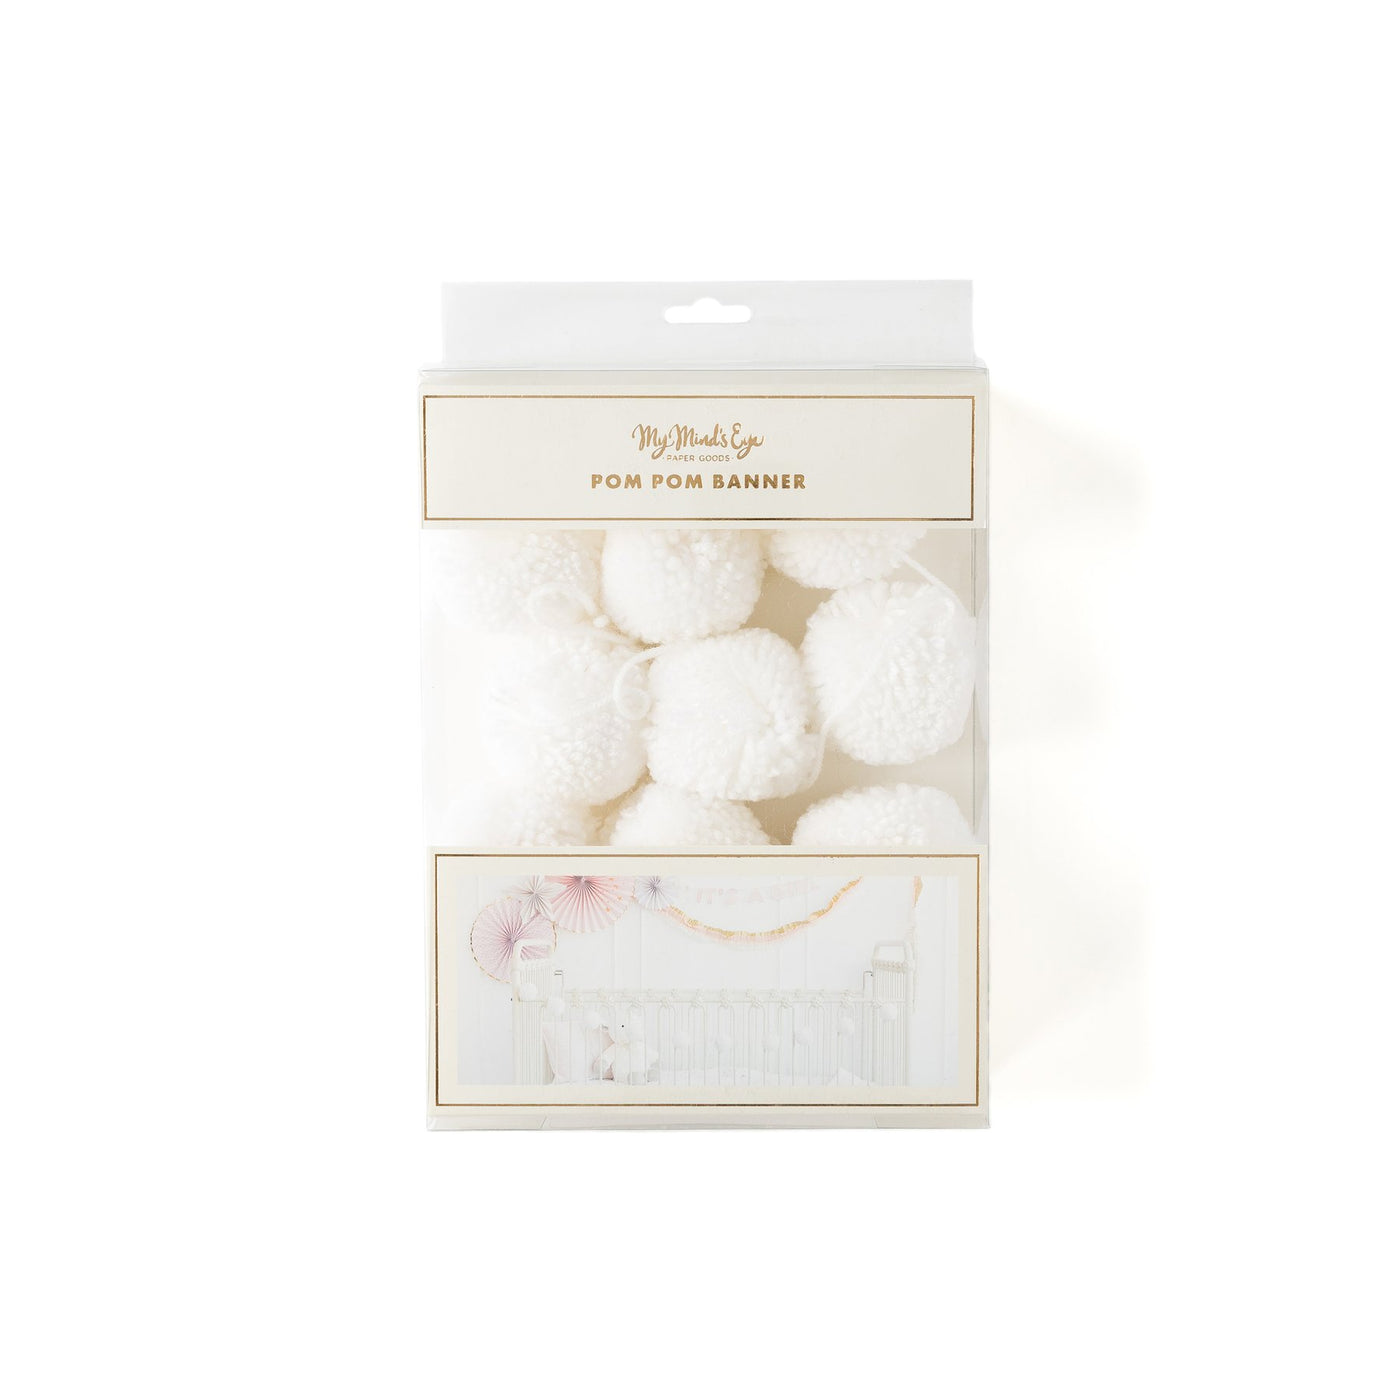 Cream Yarn Pom Poms in a white box